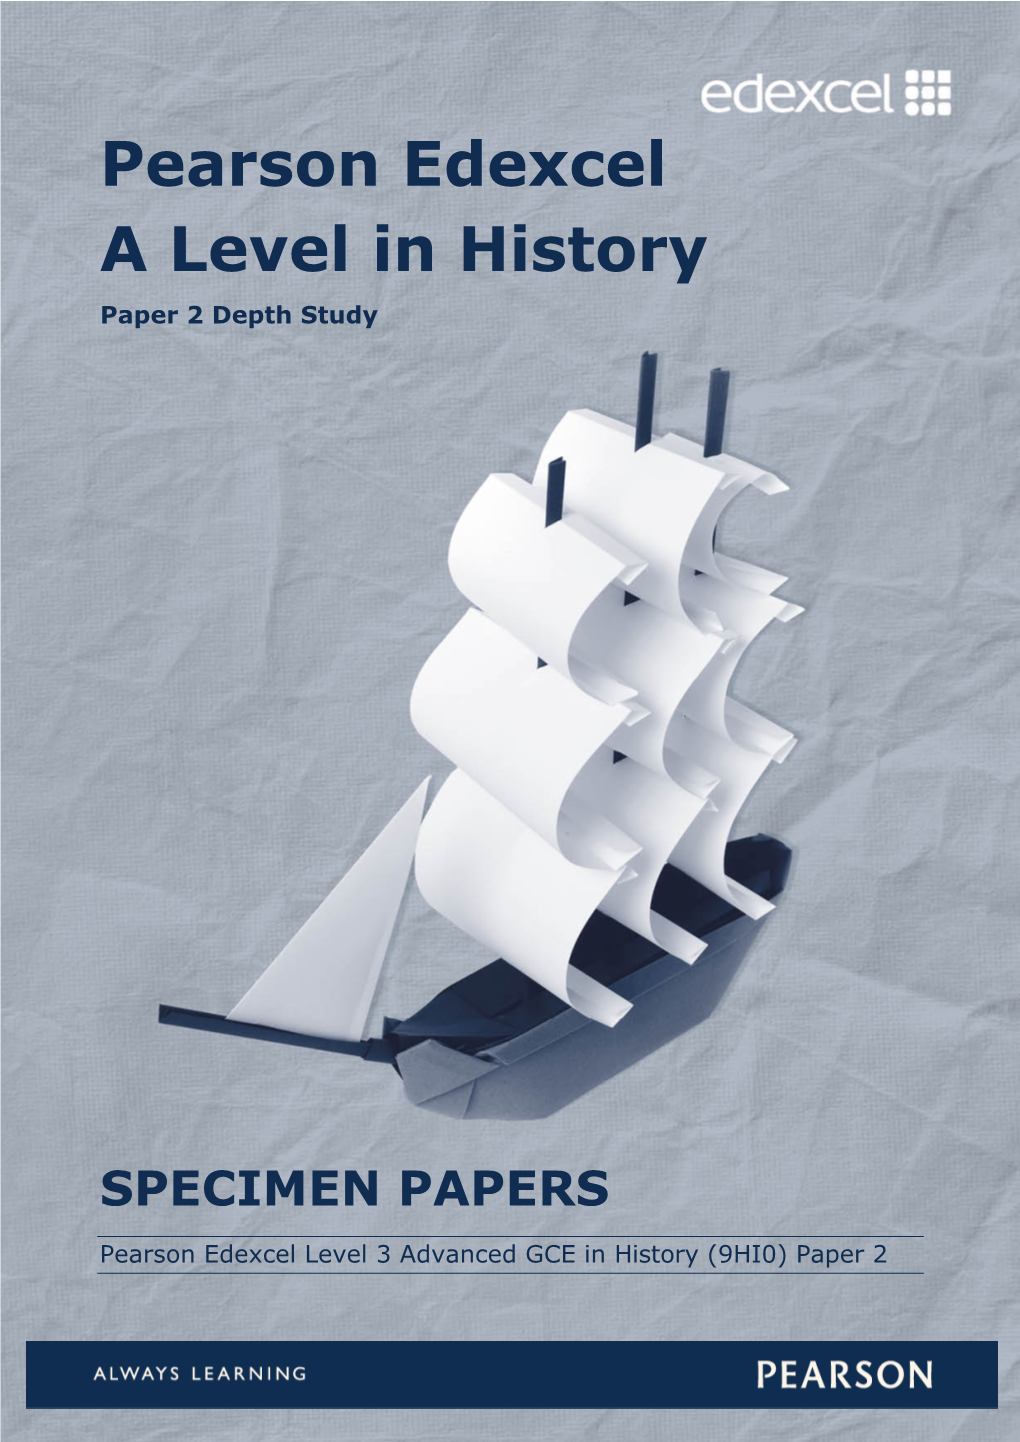 Pearson Edexcel a Level in History Paper 2 Depth Study